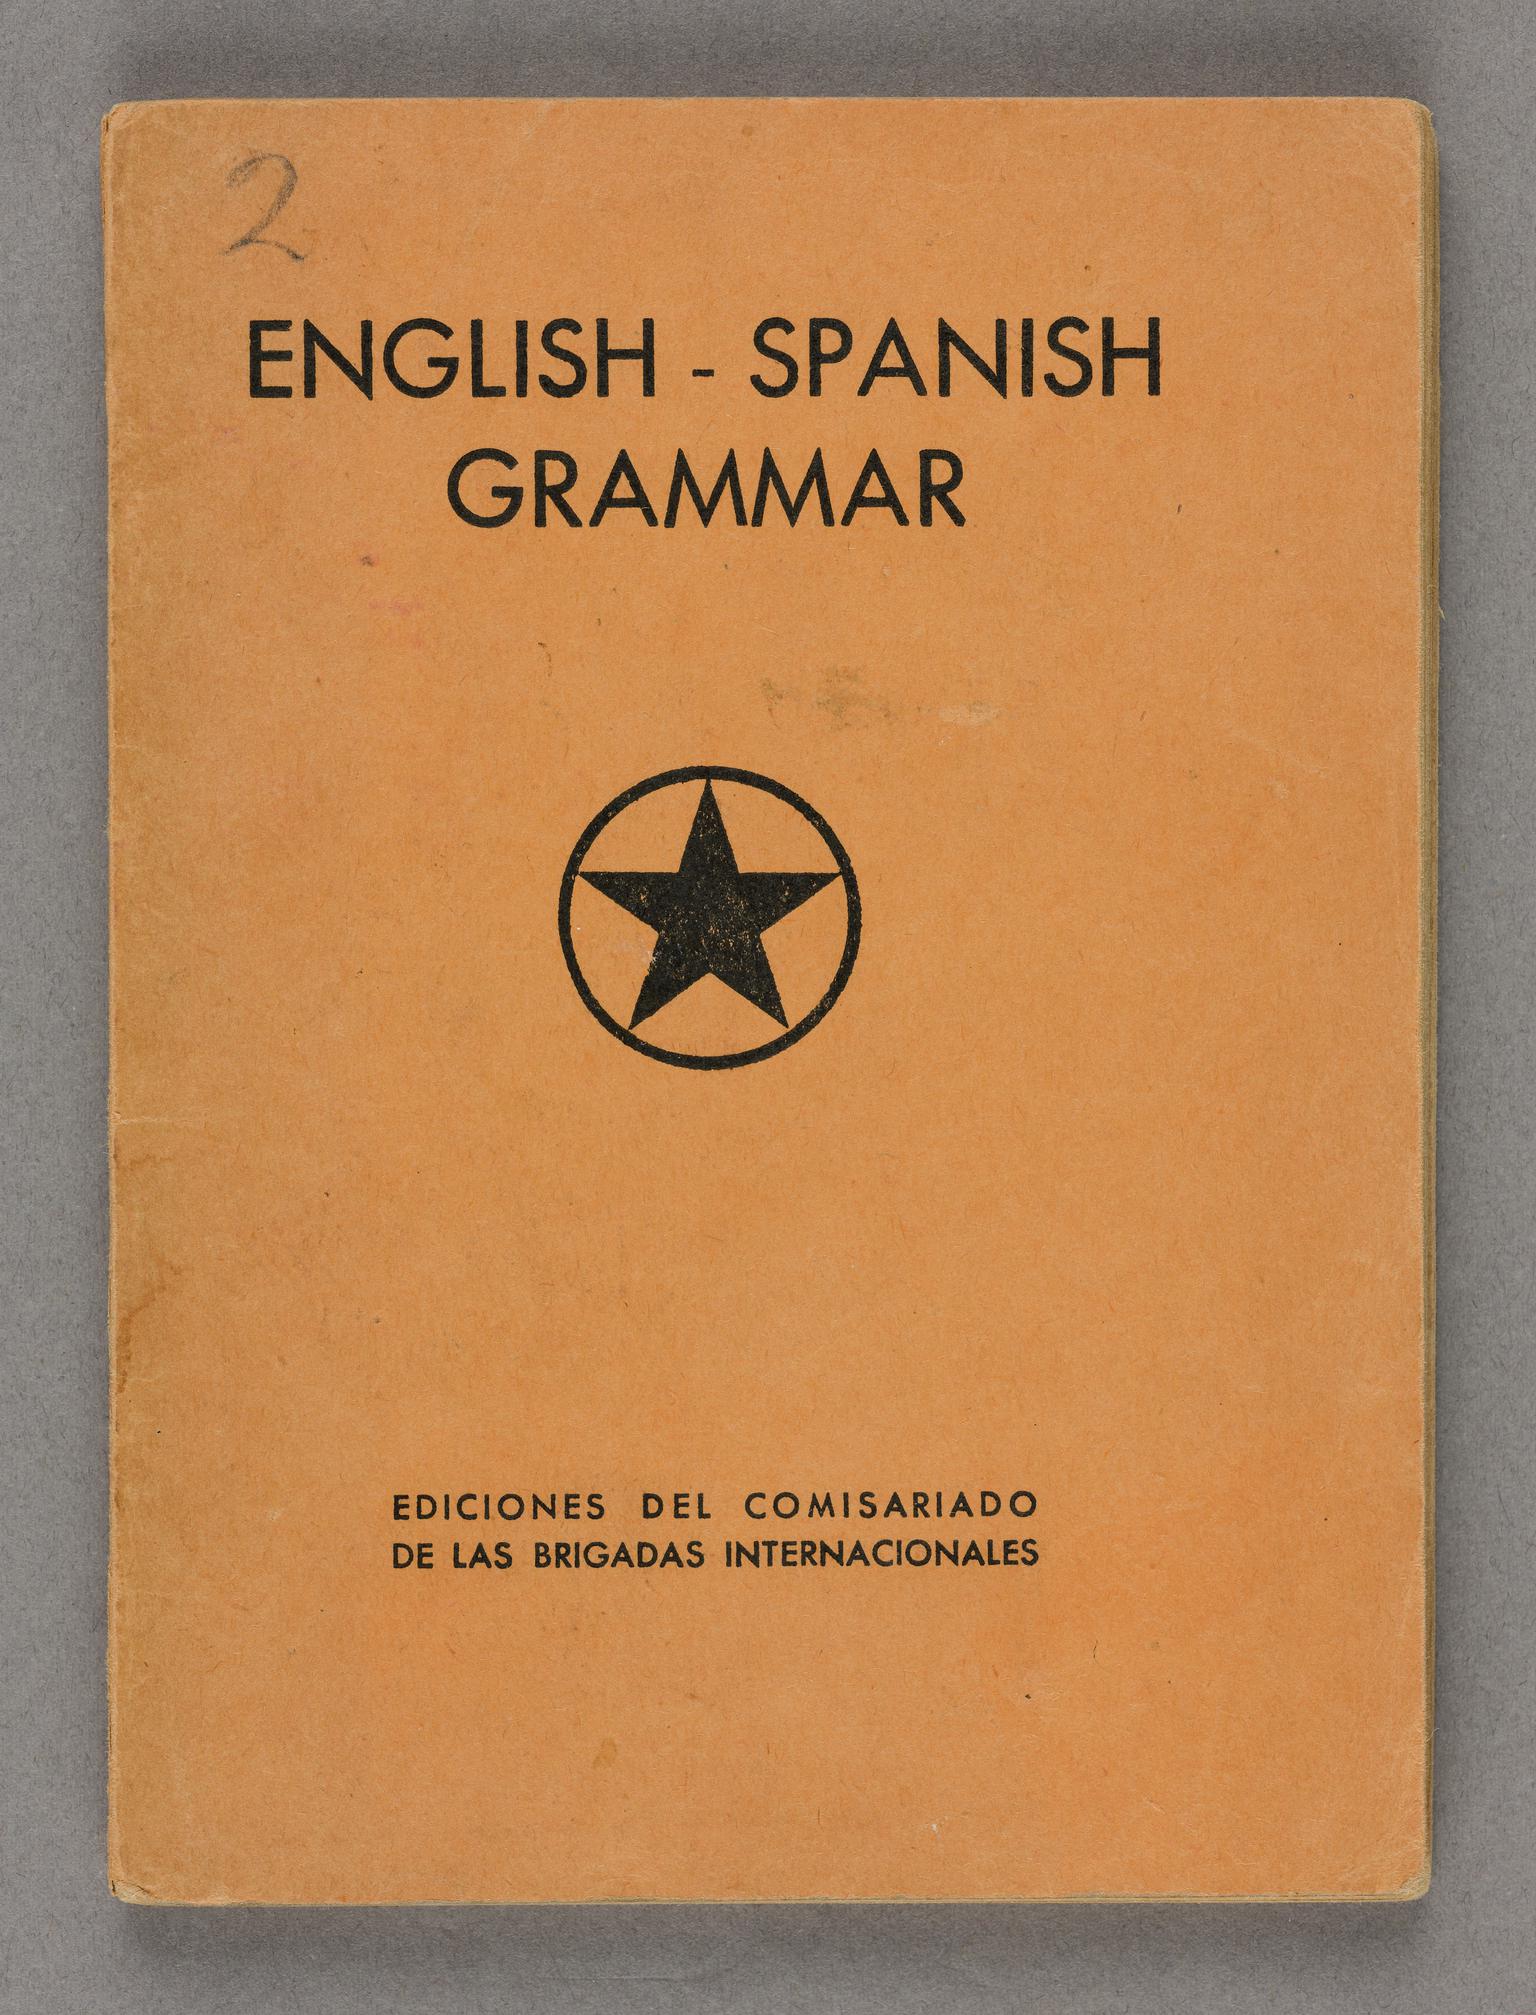 English - Spanish Grammar (book)